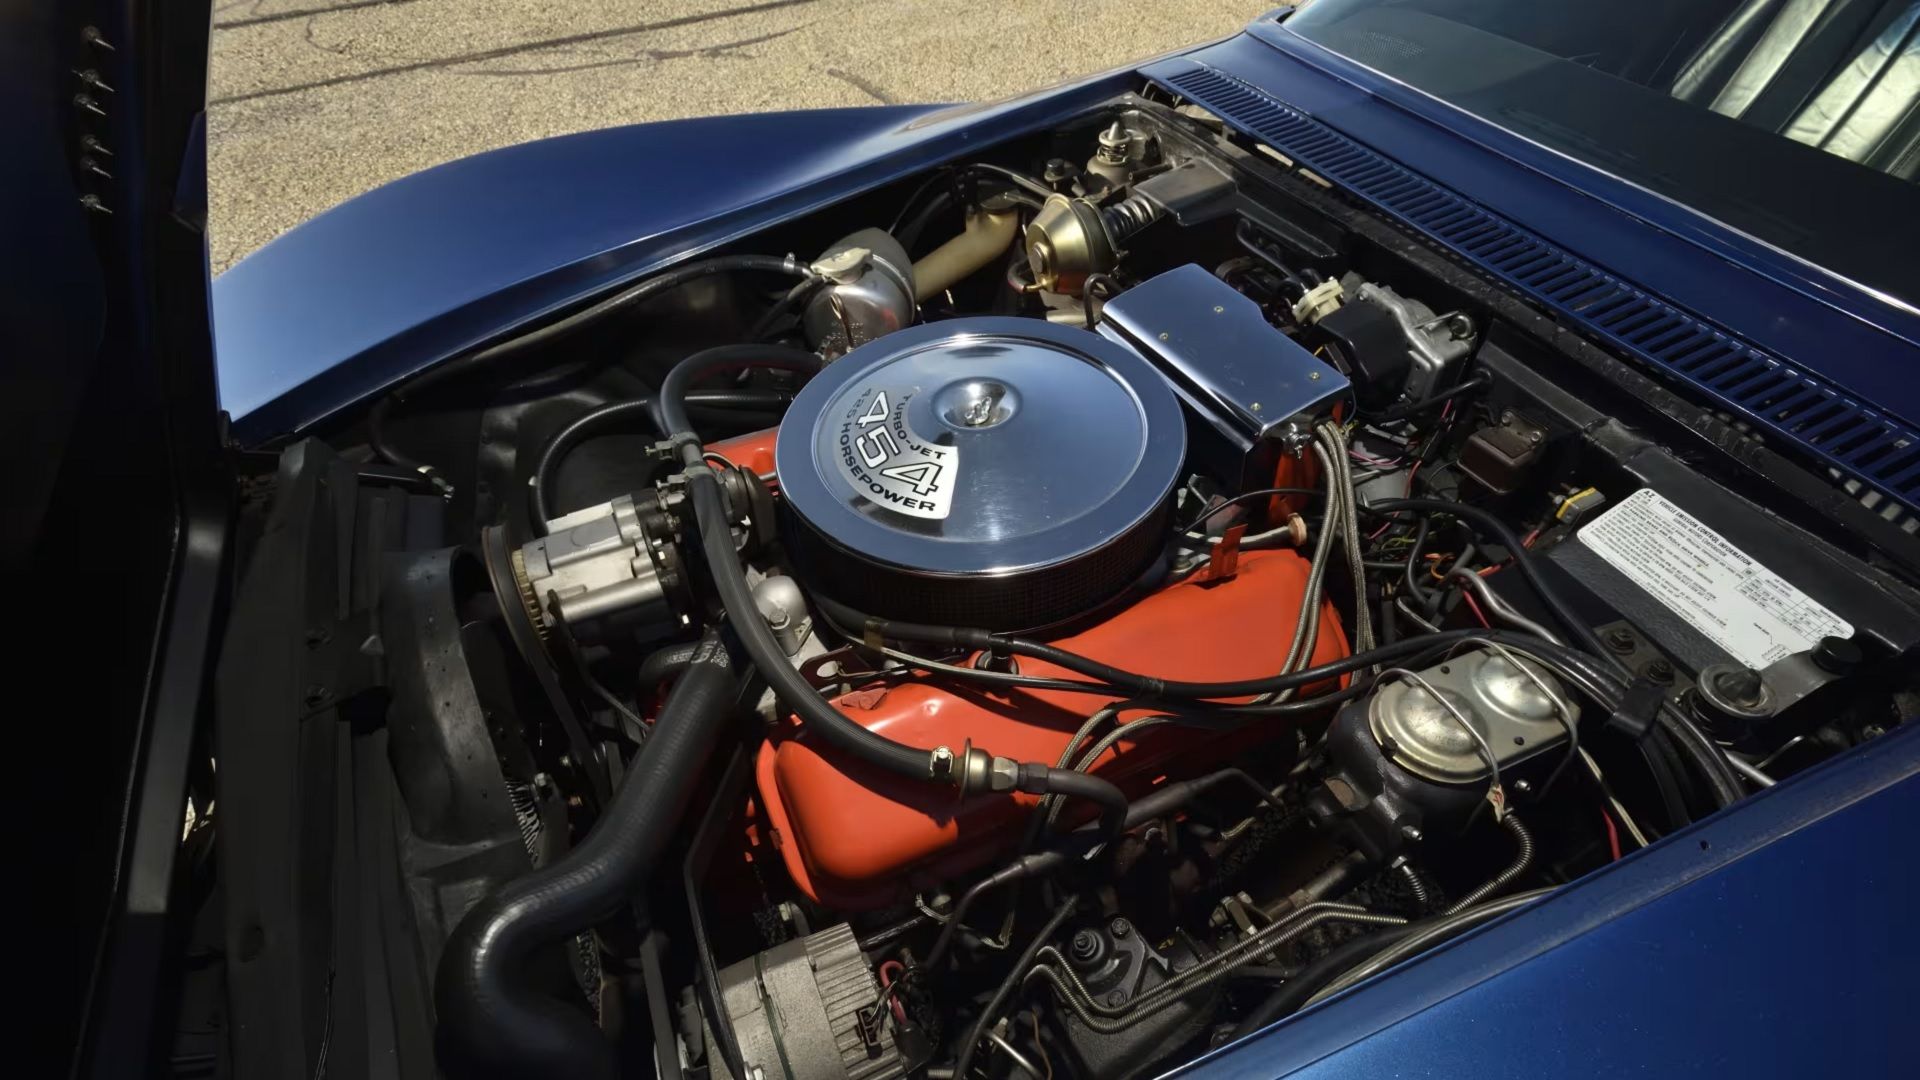 1971 Corvette With LS6 V8 Engine (Via Corvette)